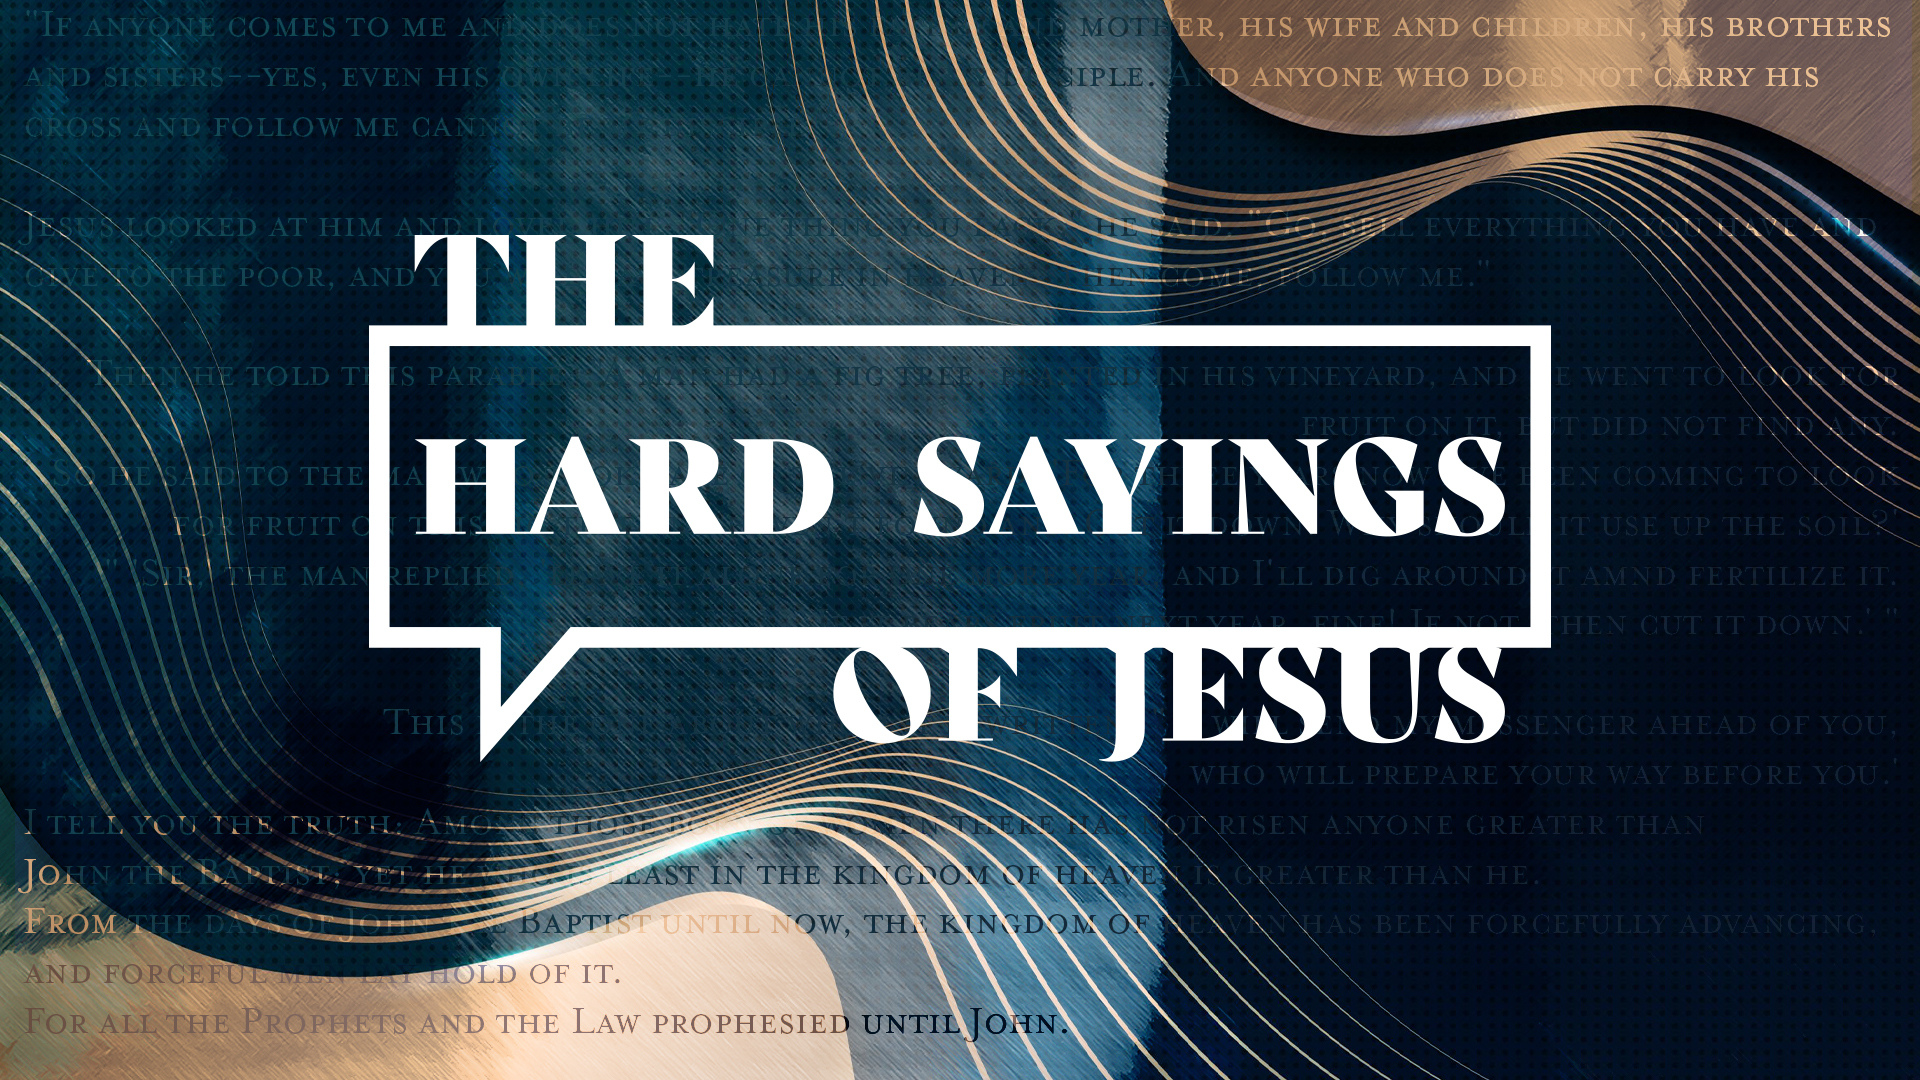 The "Hard" Sayings of Jesus